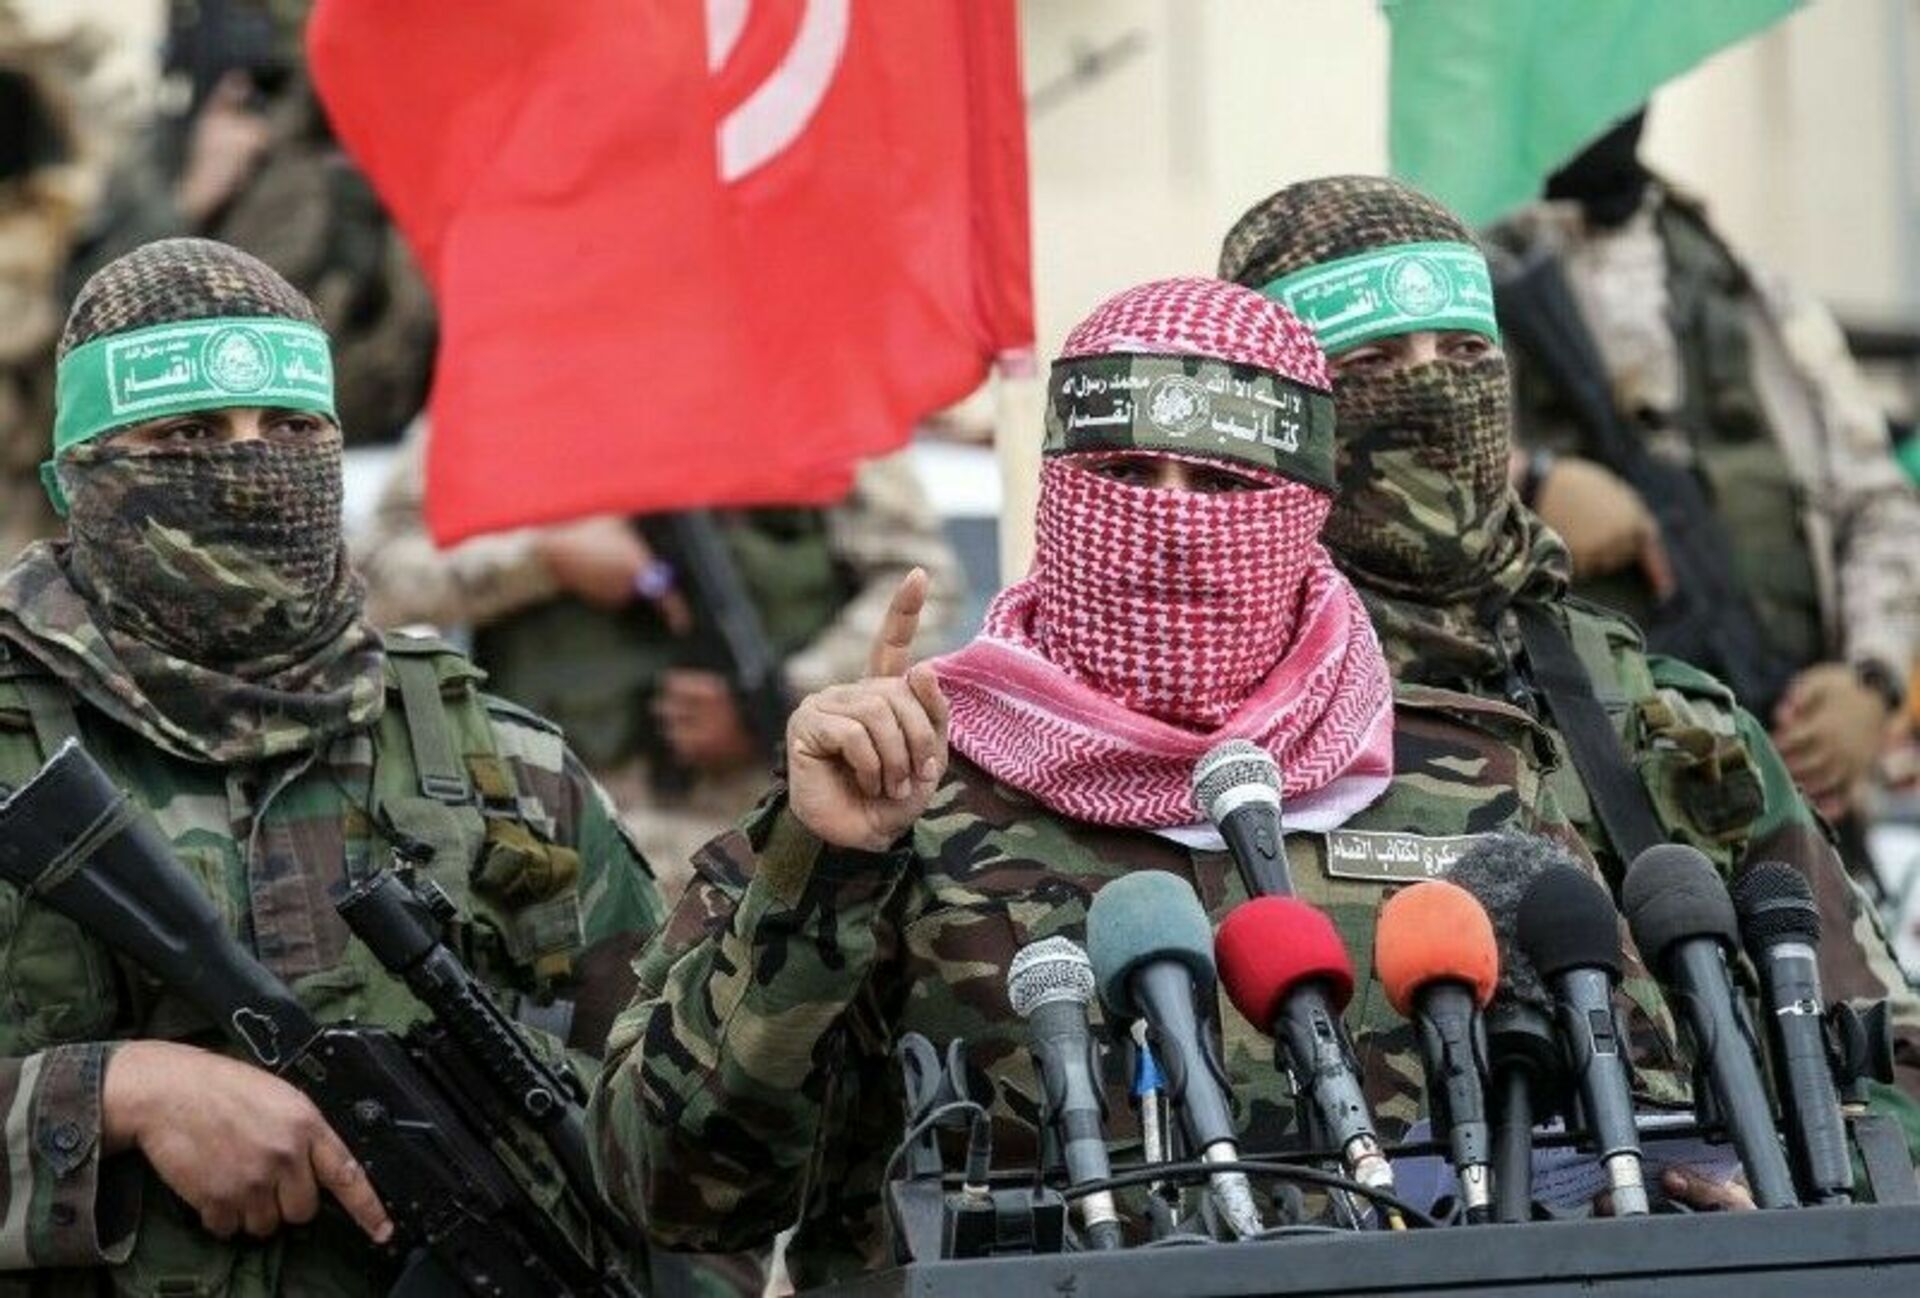 Мусульманские войска. ХАМАС Палестина. Абу Убейда ХАМАС. ХАМАС 1988. Аль-Каида ХАМАС.